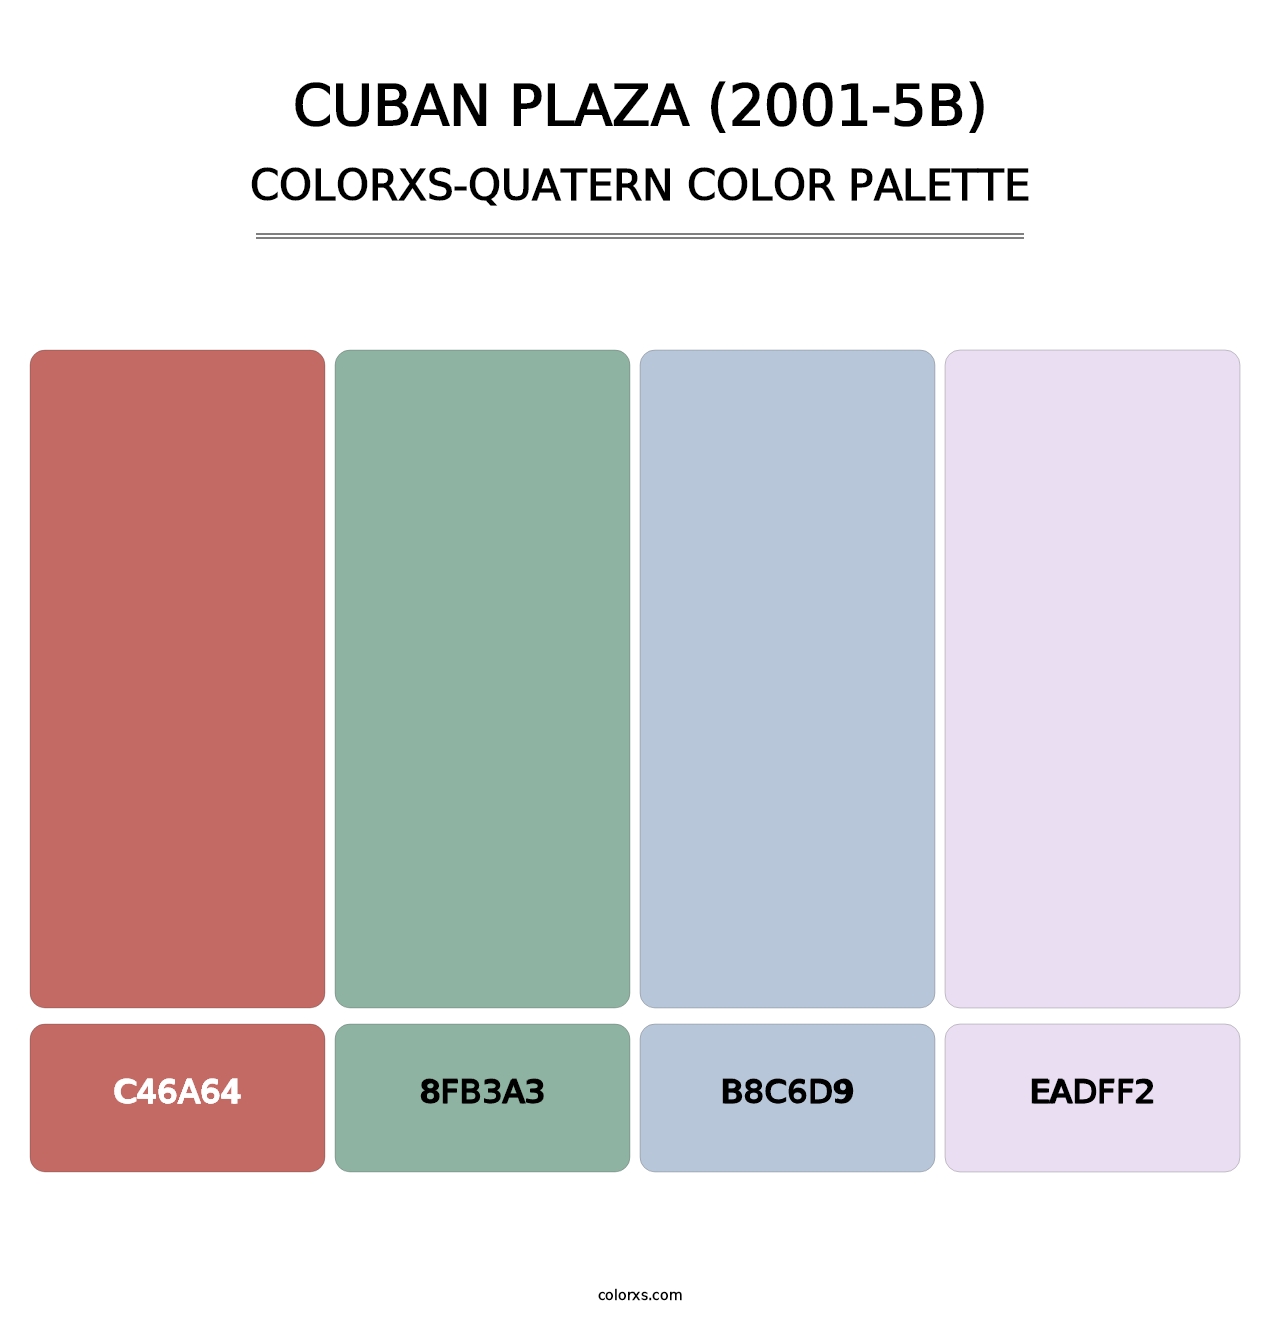 Cuban Plaza (2001-5B) - Colorxs Quatern Palette